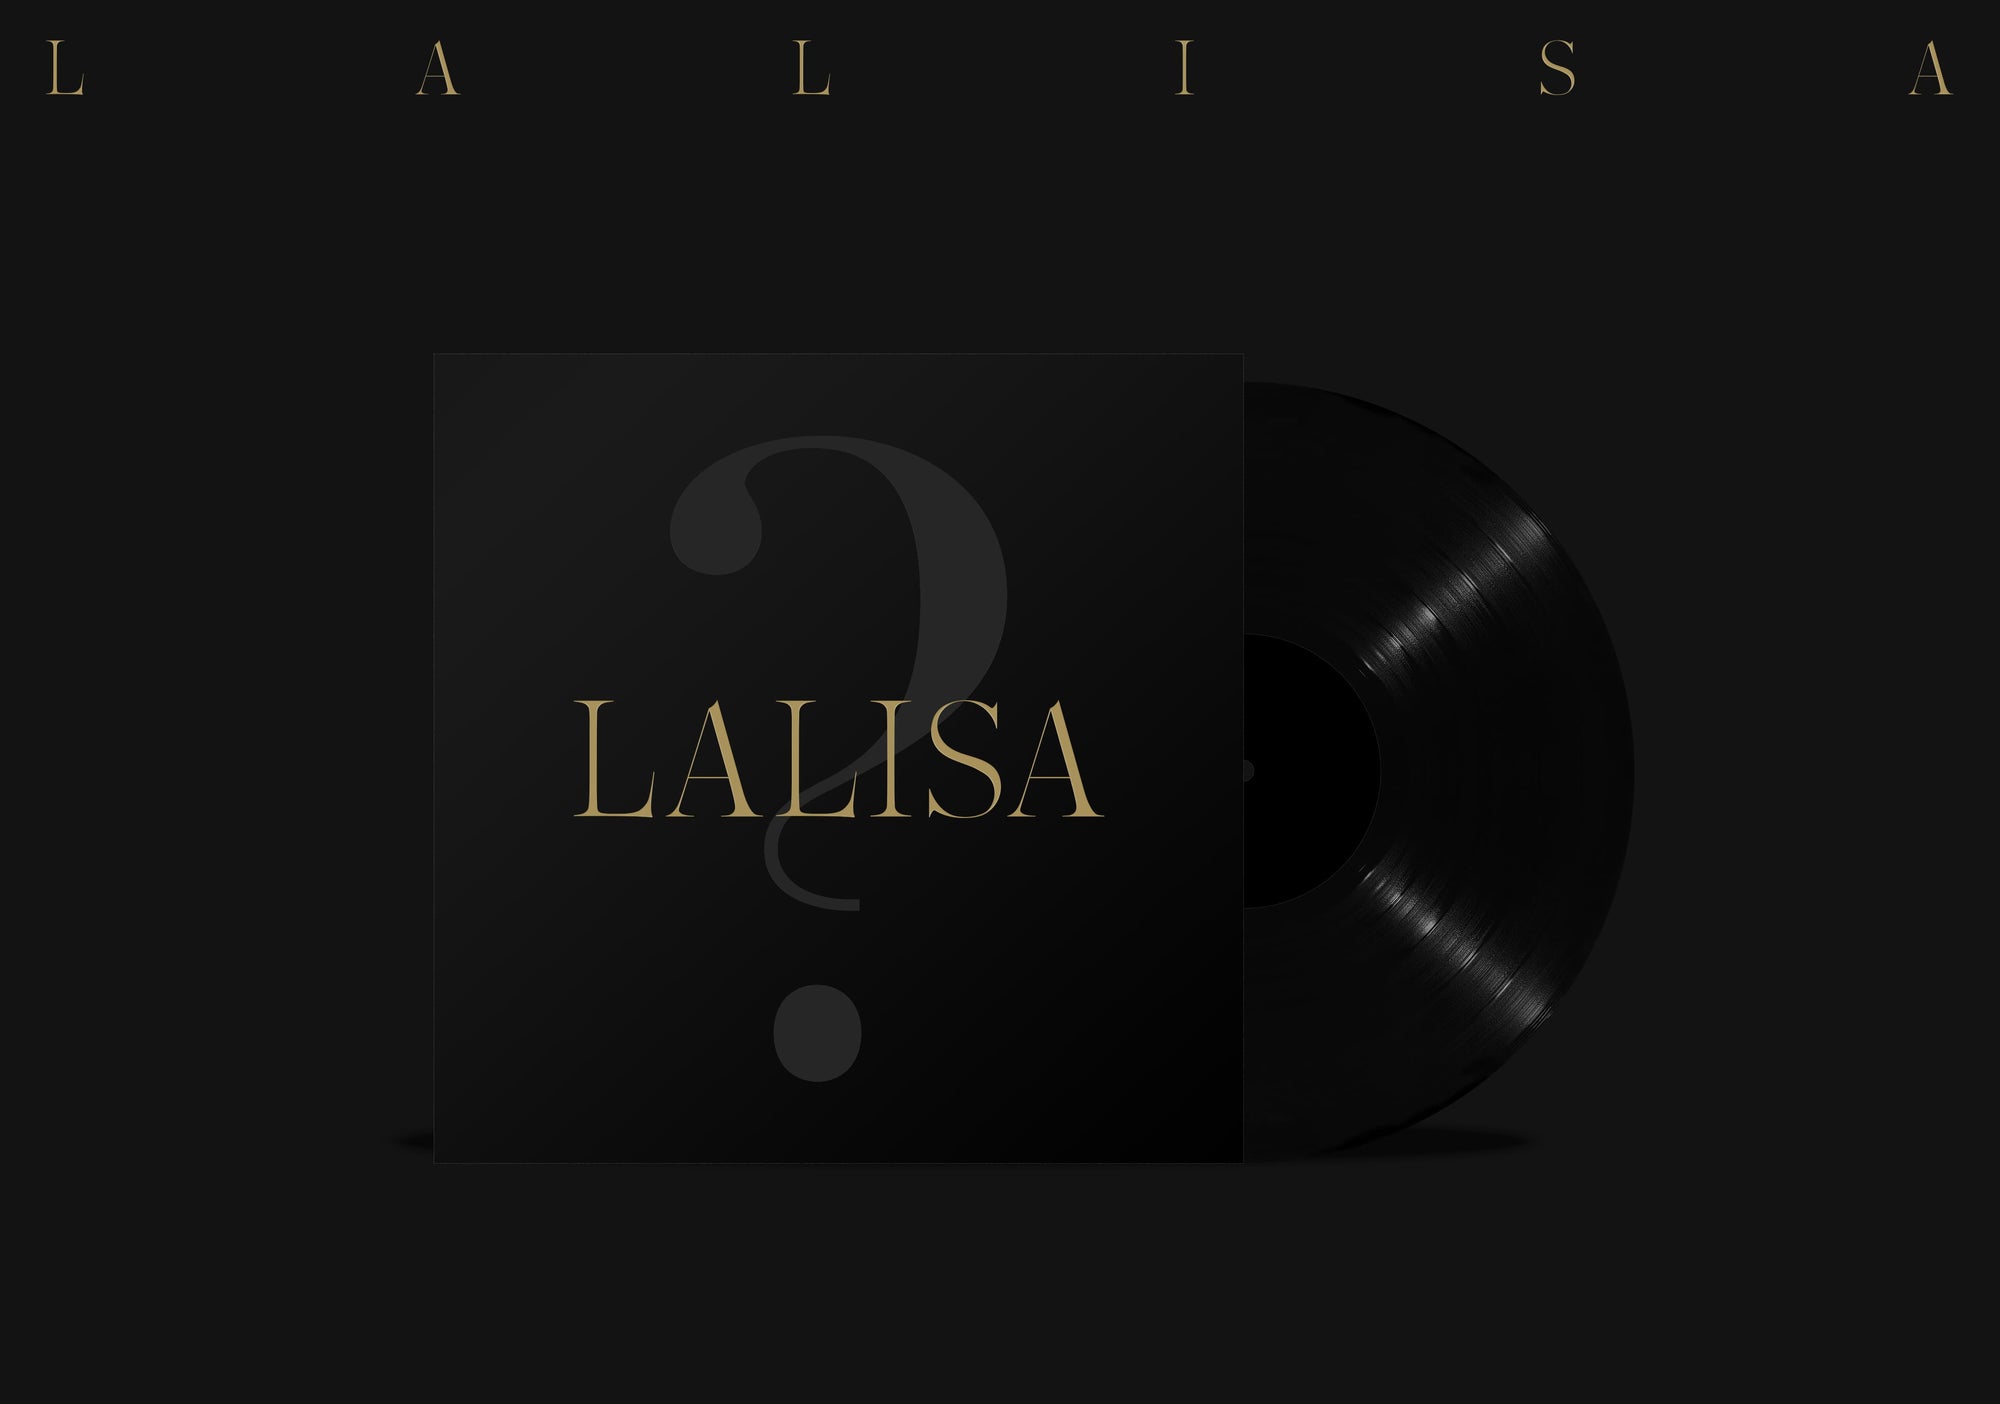 Lisa - 1st Single Album - LALISA - (LP ver.)